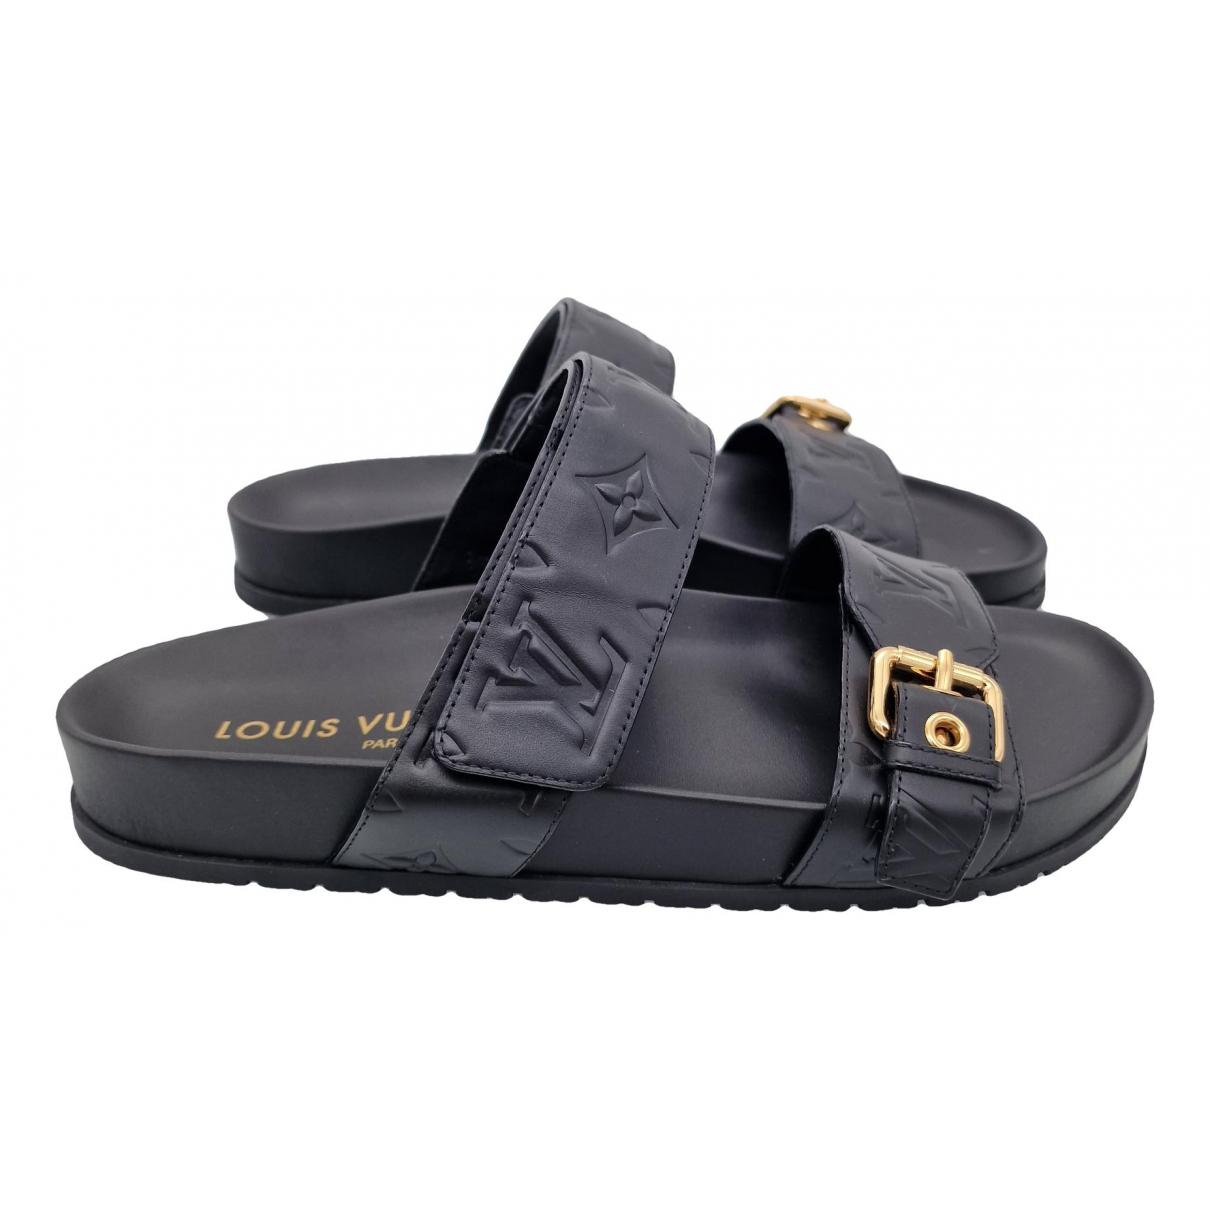 Lv archlight leather sandal Louis Vuitton Black size 39 EU in Leather -  31988023